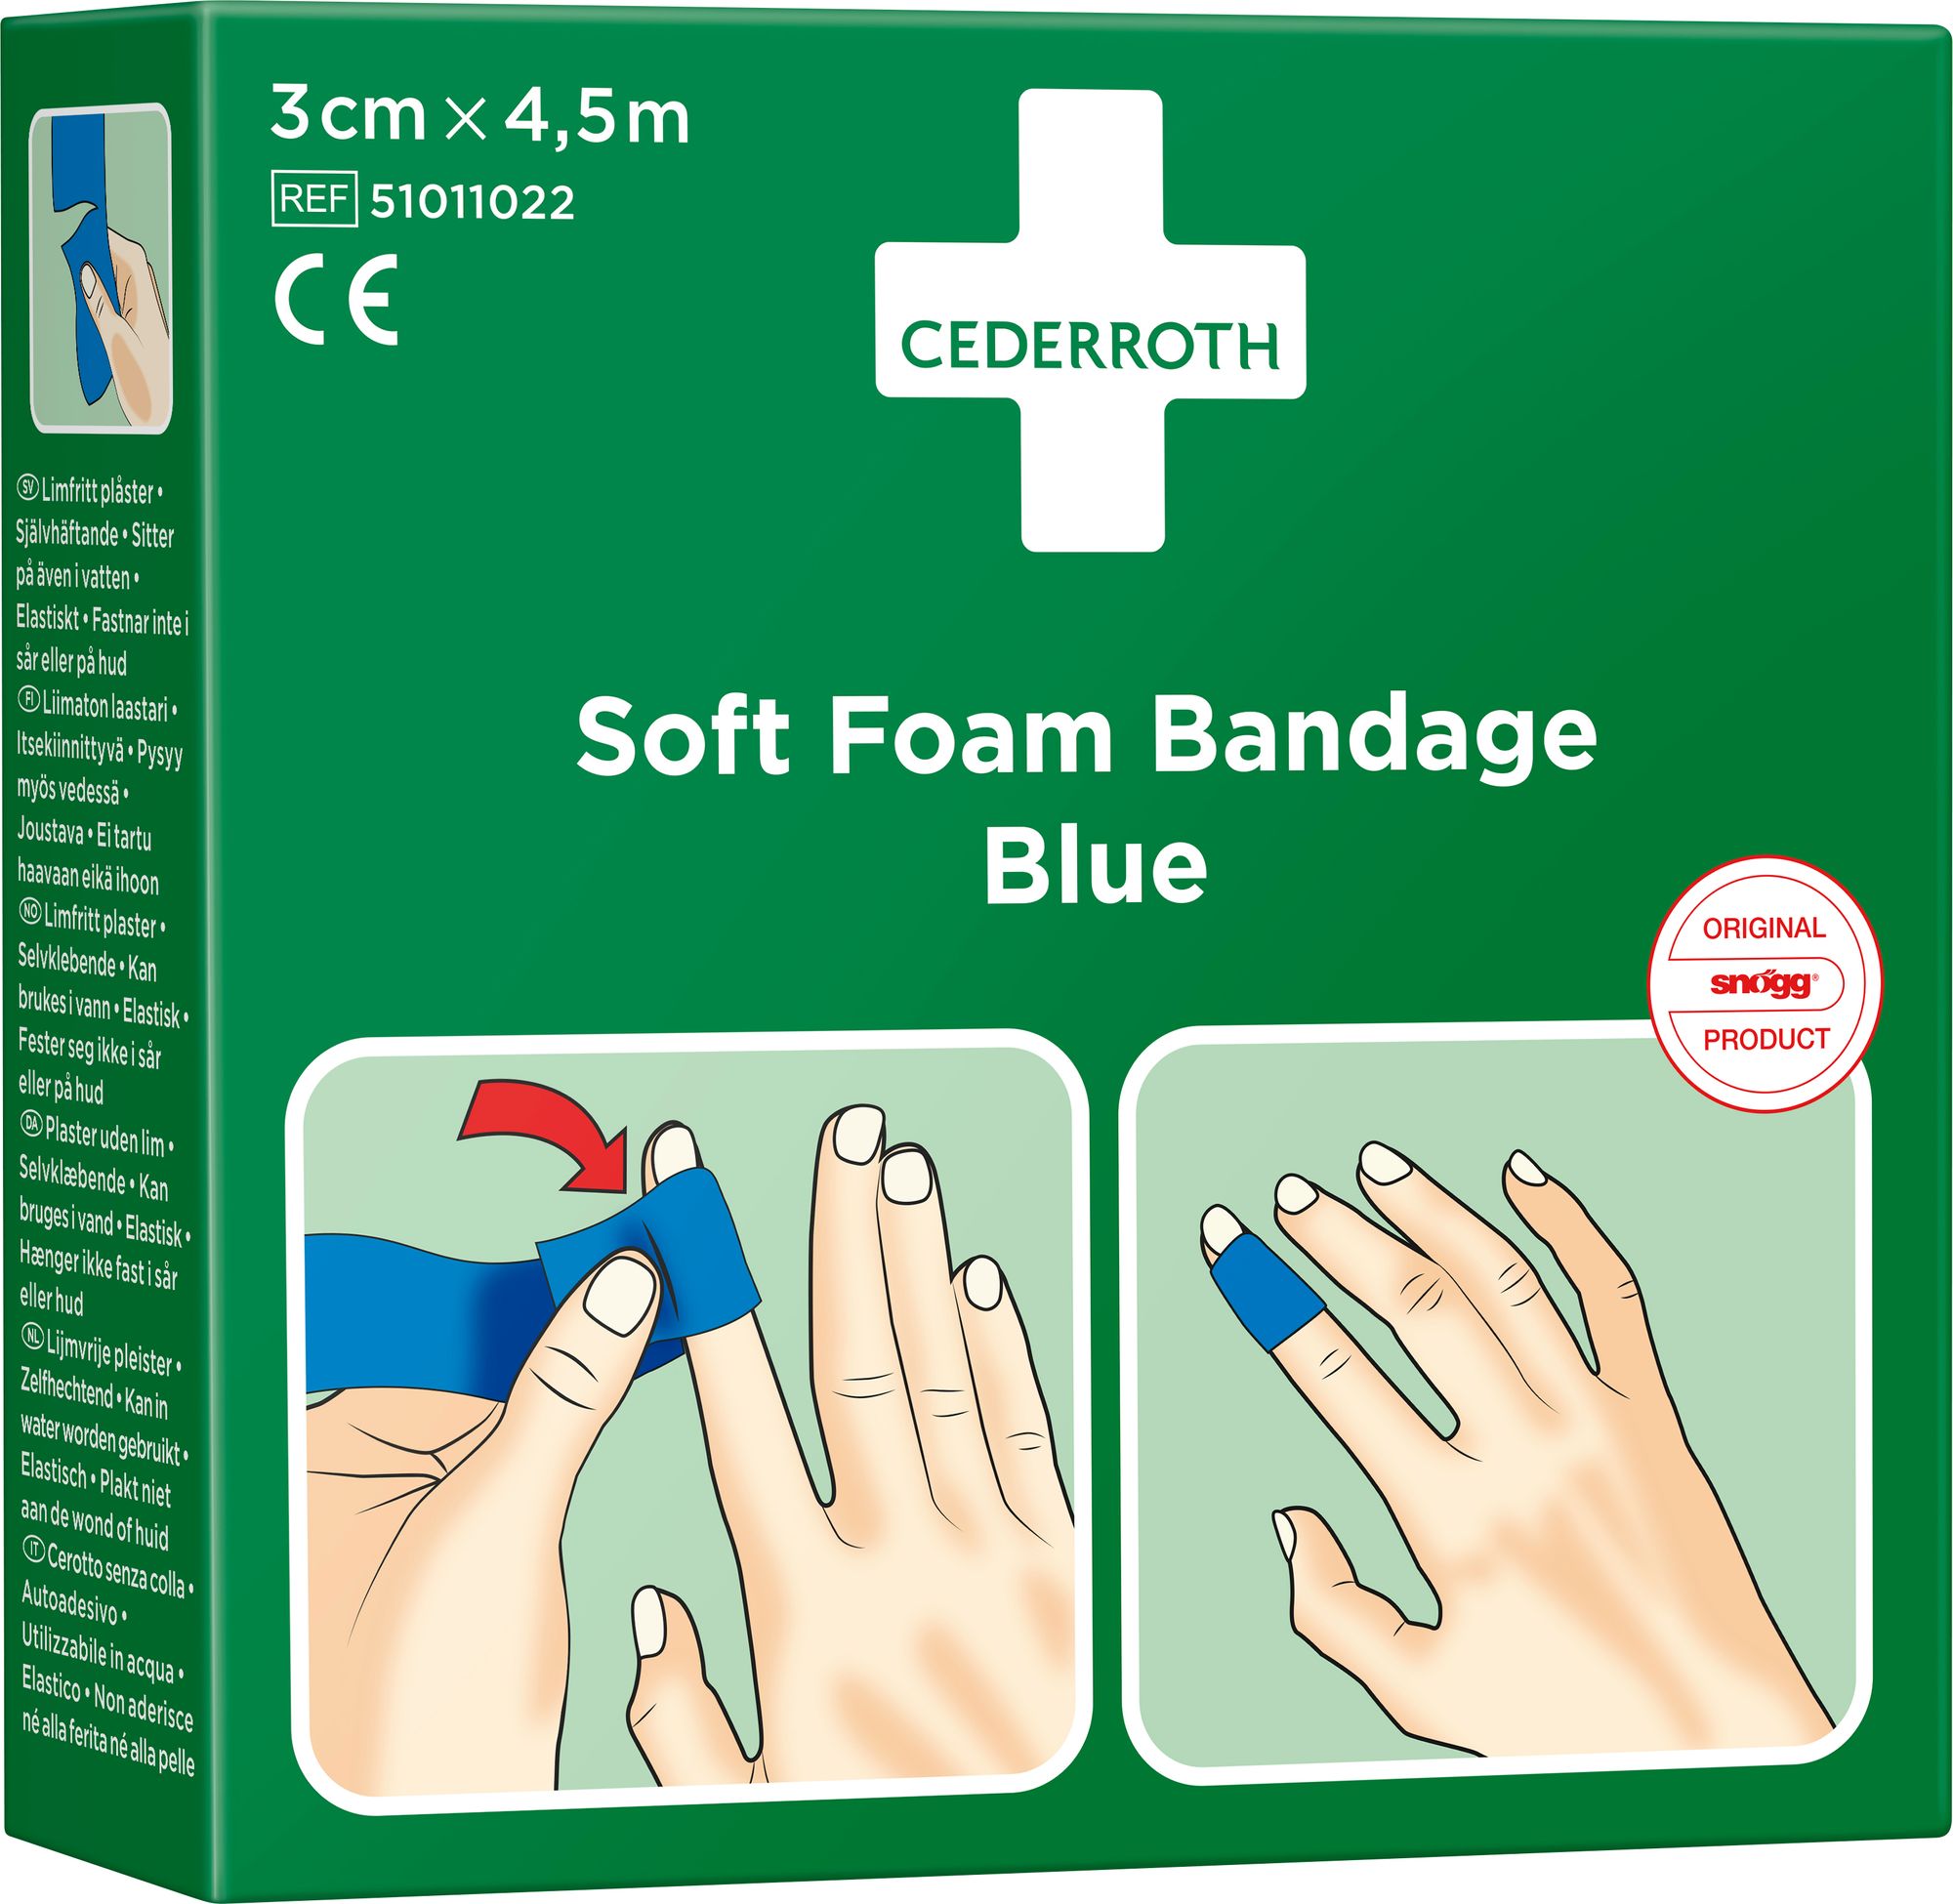 Cederroth Soft Foam Bandage Blue selbstklebendes Pflaster 3 cm x 4,5 m